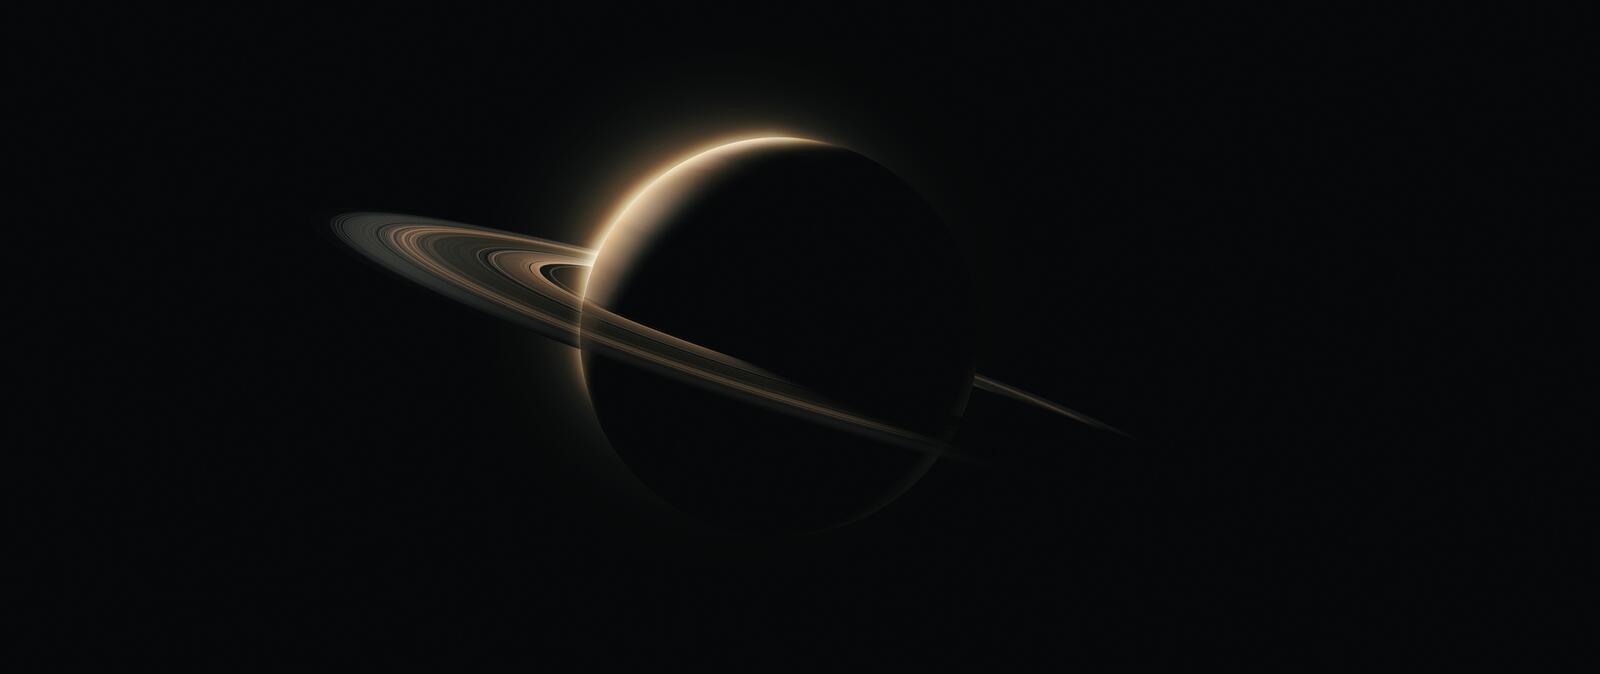 Обои планета тьма кольцо сатурна на рабочий стол